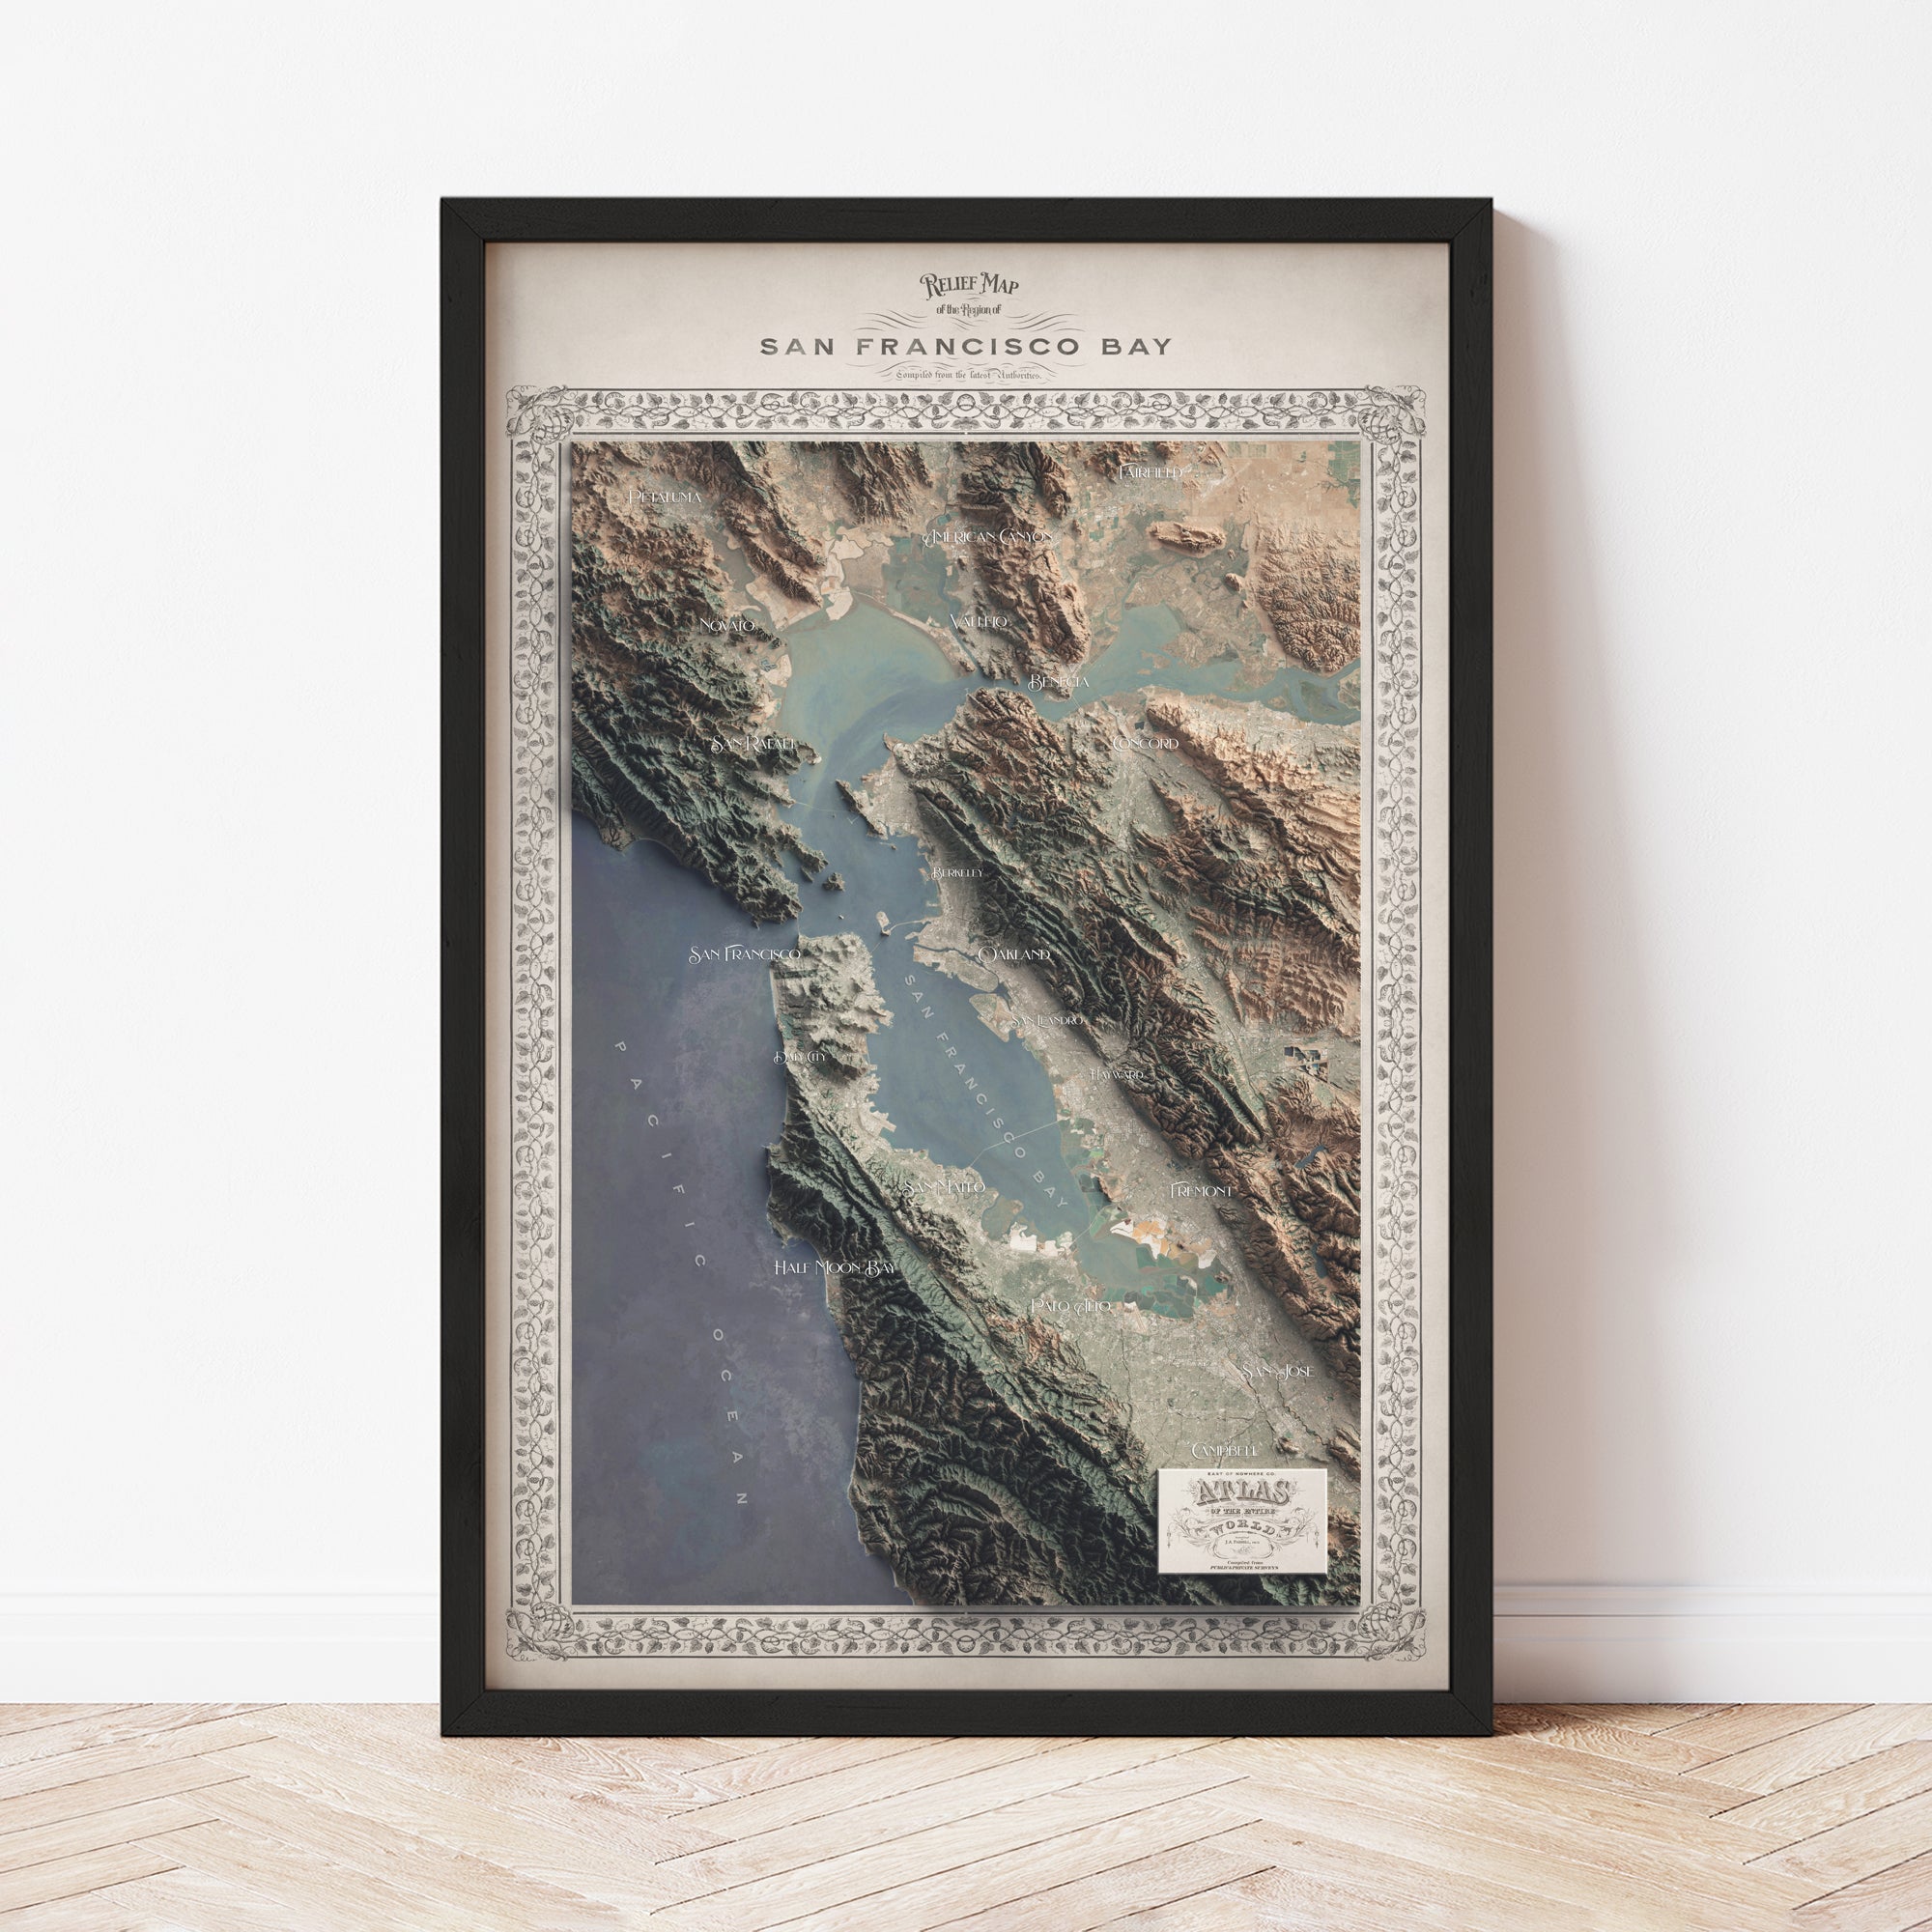 San Francisco Bay, California - The East of Nowhere World Atlas